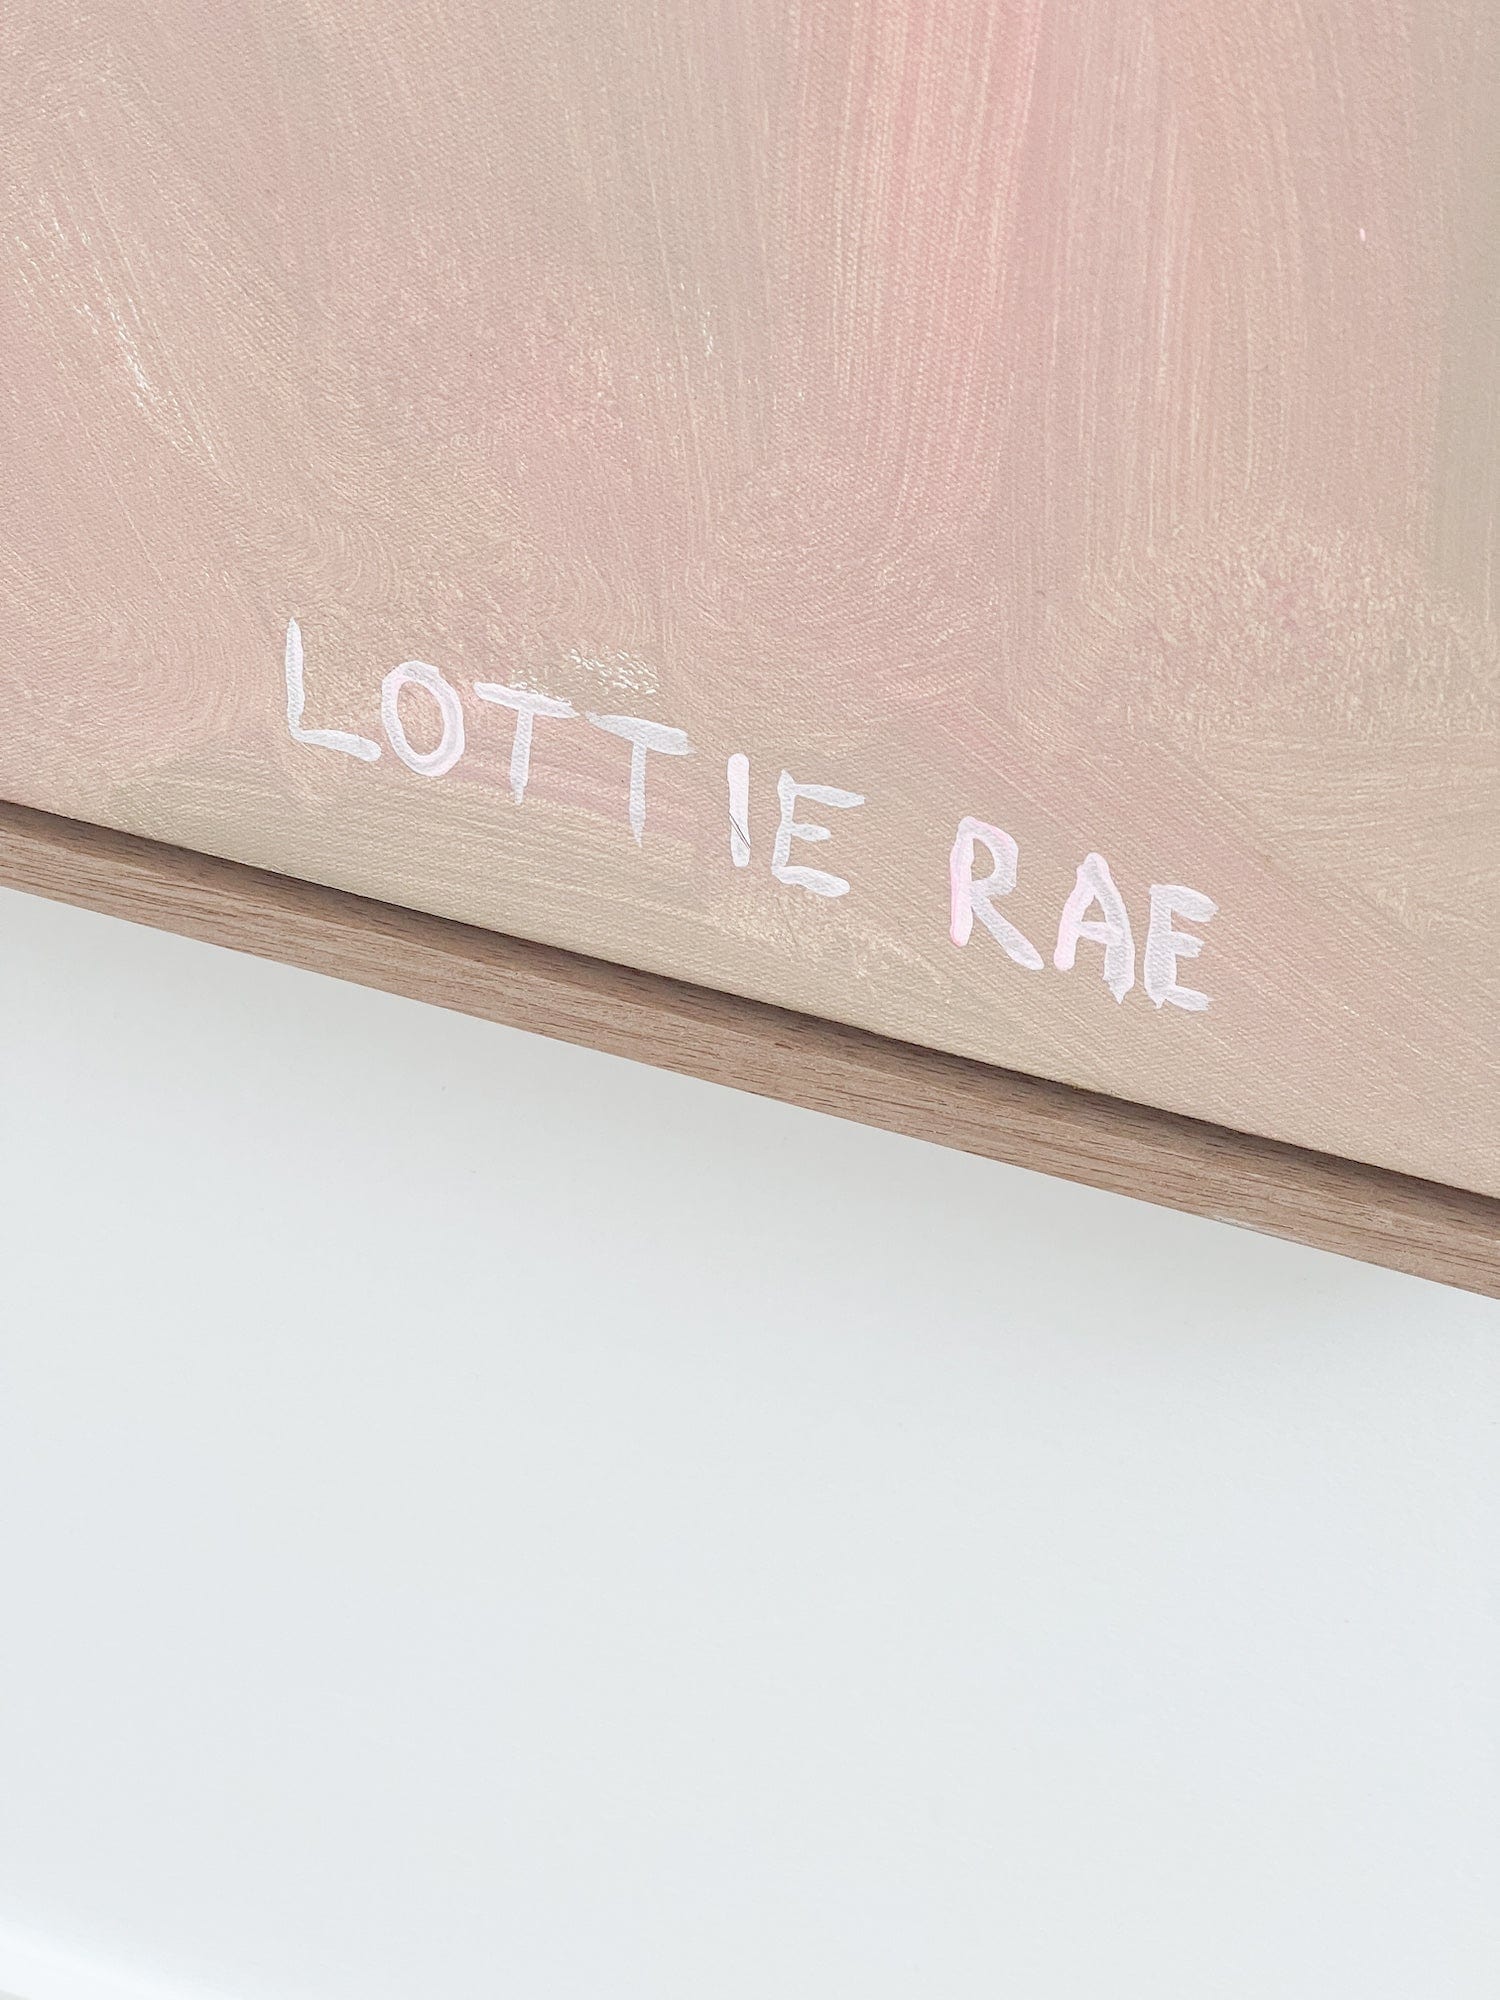 Lottie Rae Prints Lottie Rae Fine Art Canvas Print - New Beginnings